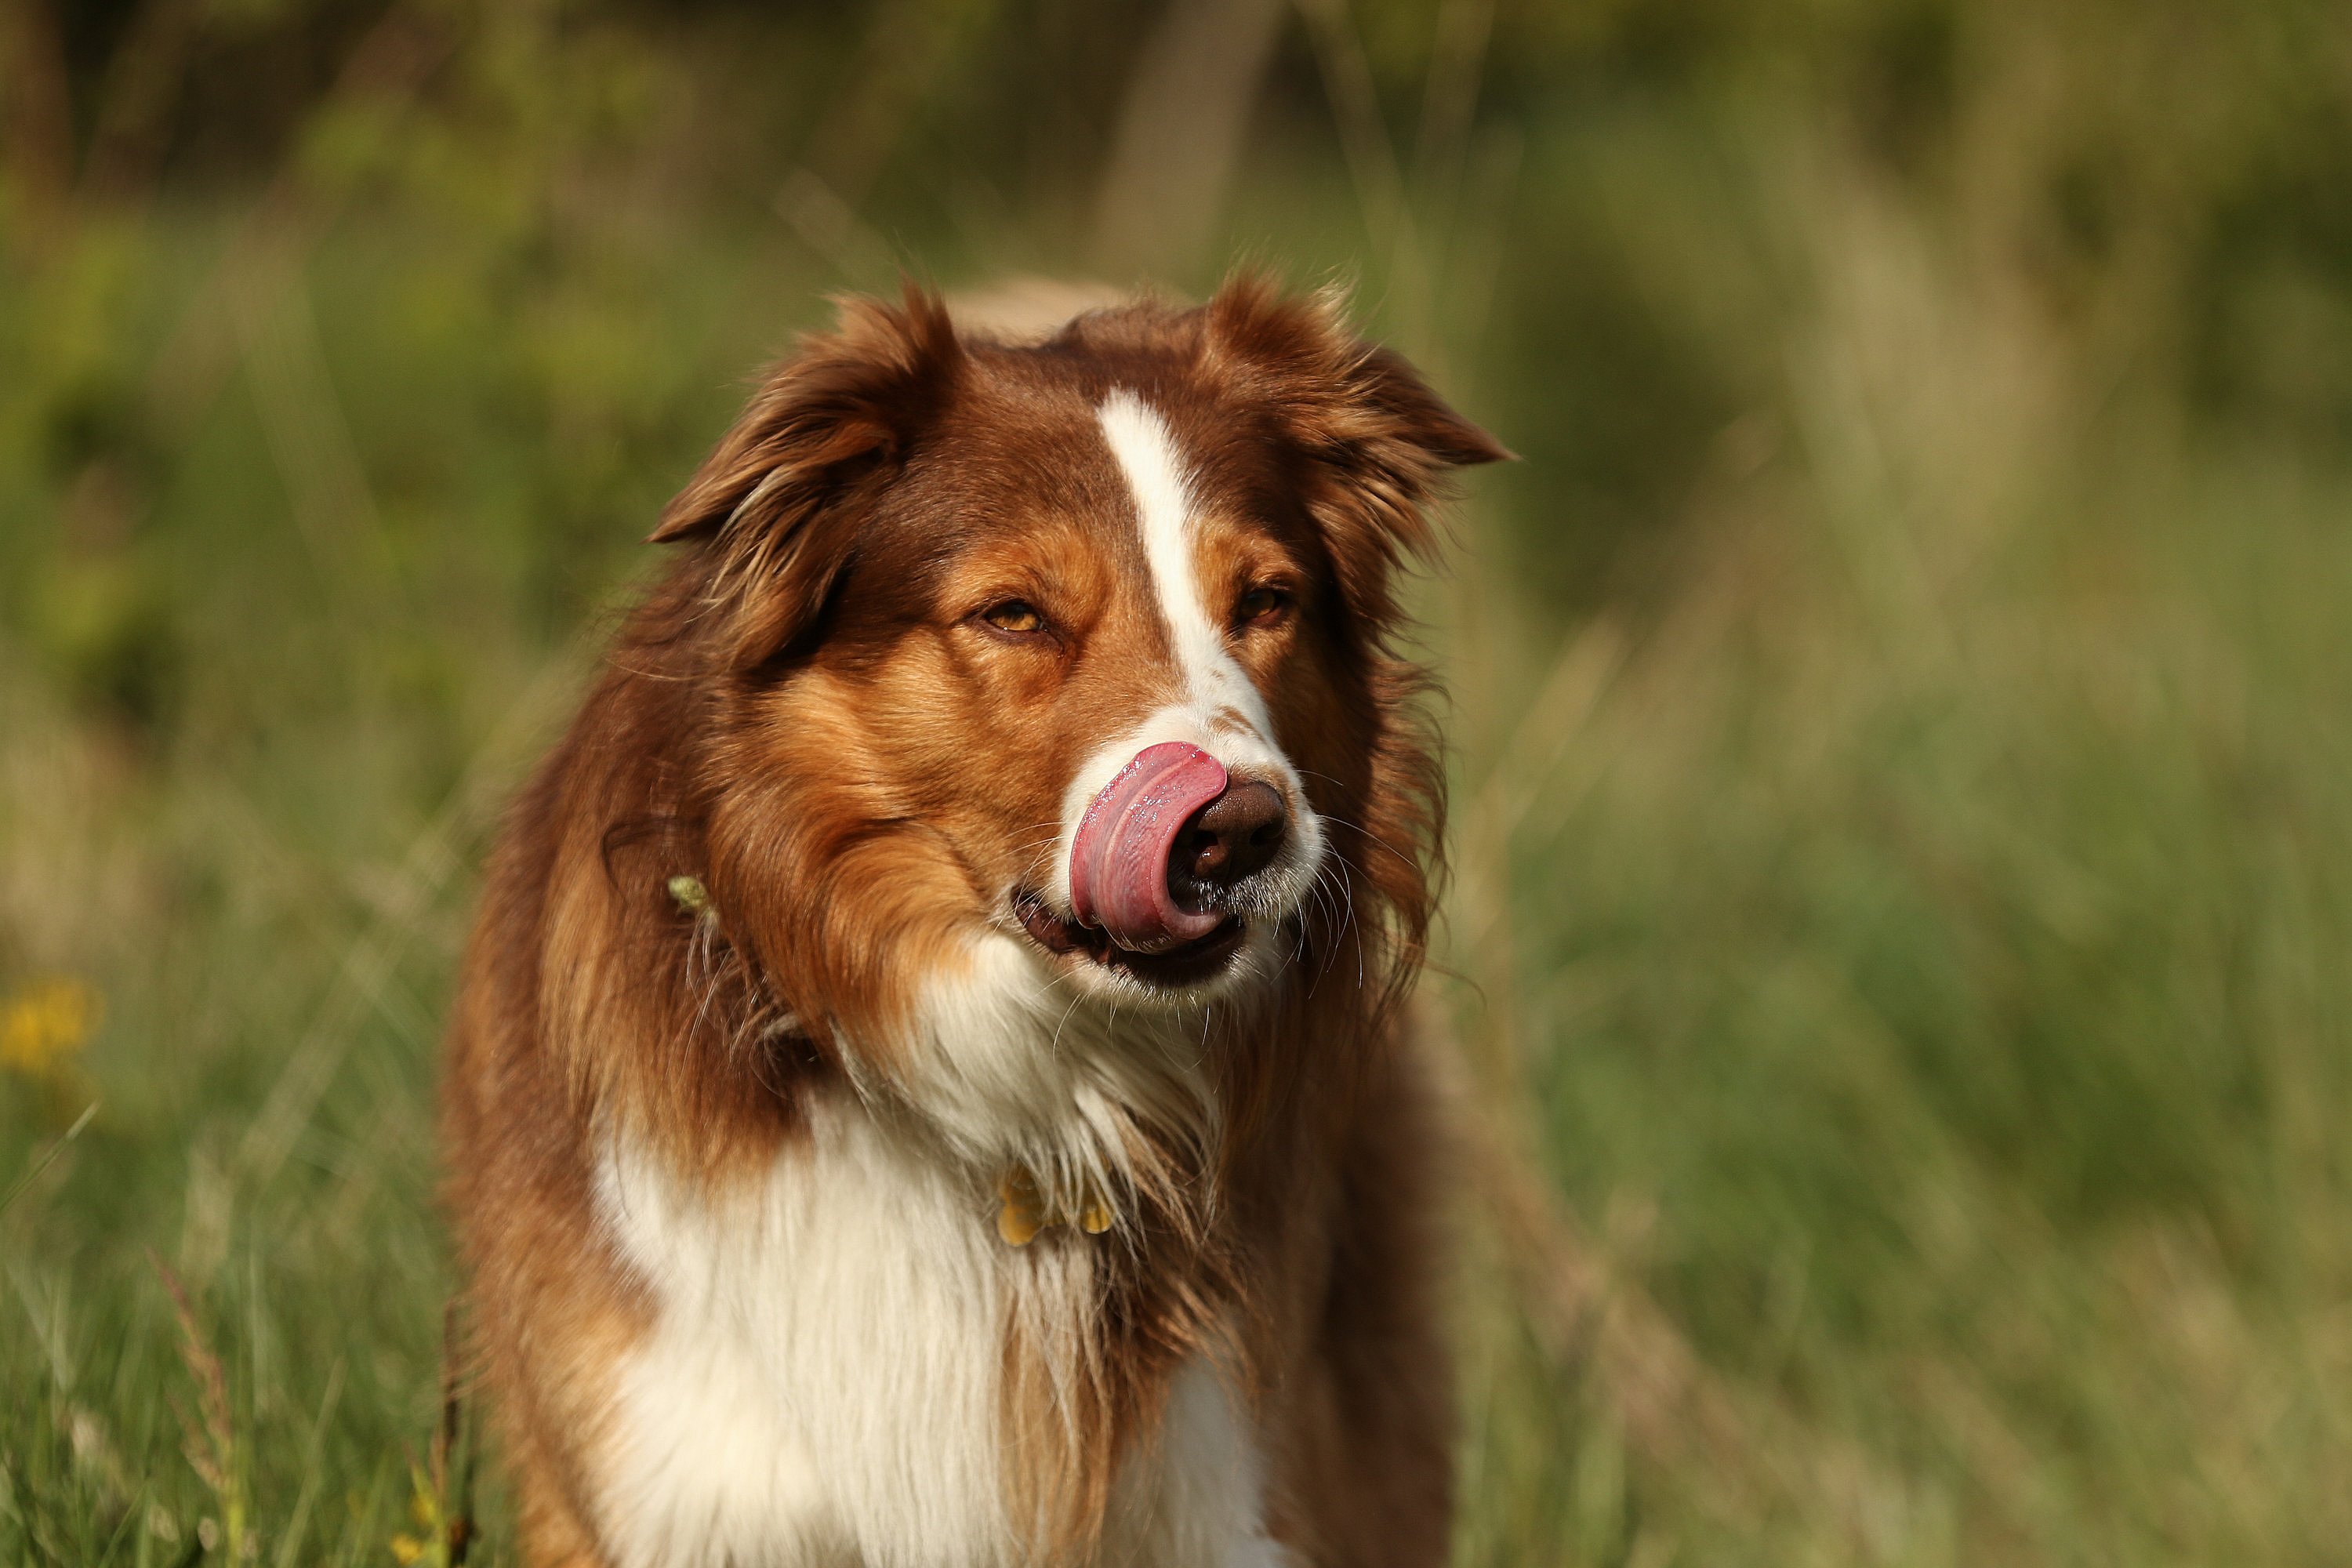 kold Nogen skat Dyrlæger advarer: Det må din hund aldrig spise i skoven | TV 2 Fyn